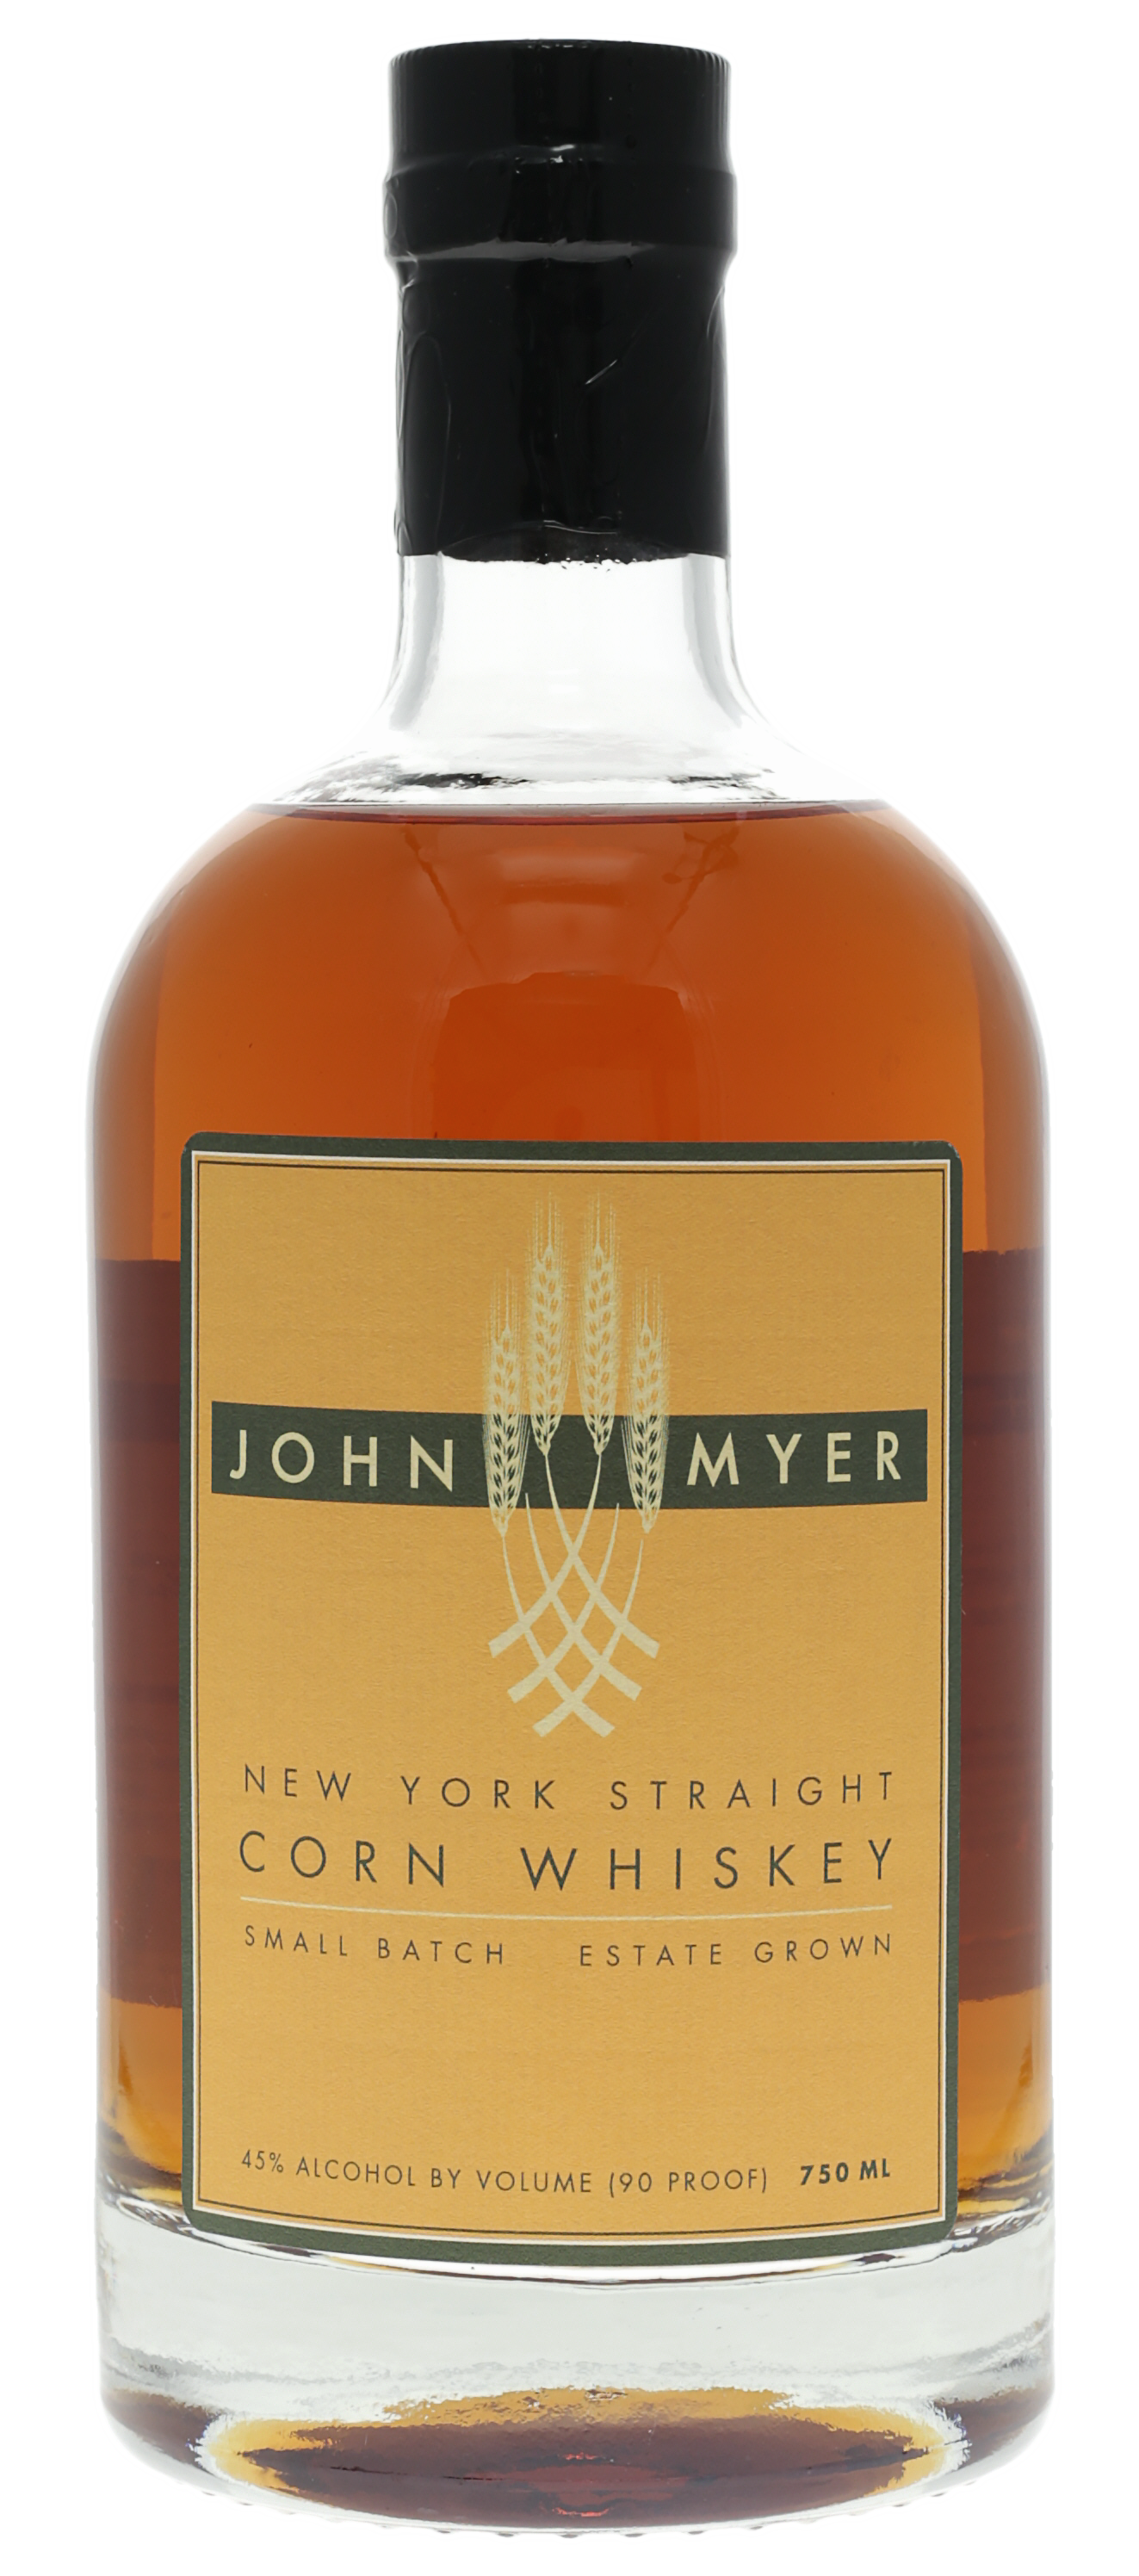 John Myer New York Straight Corn Whiskey